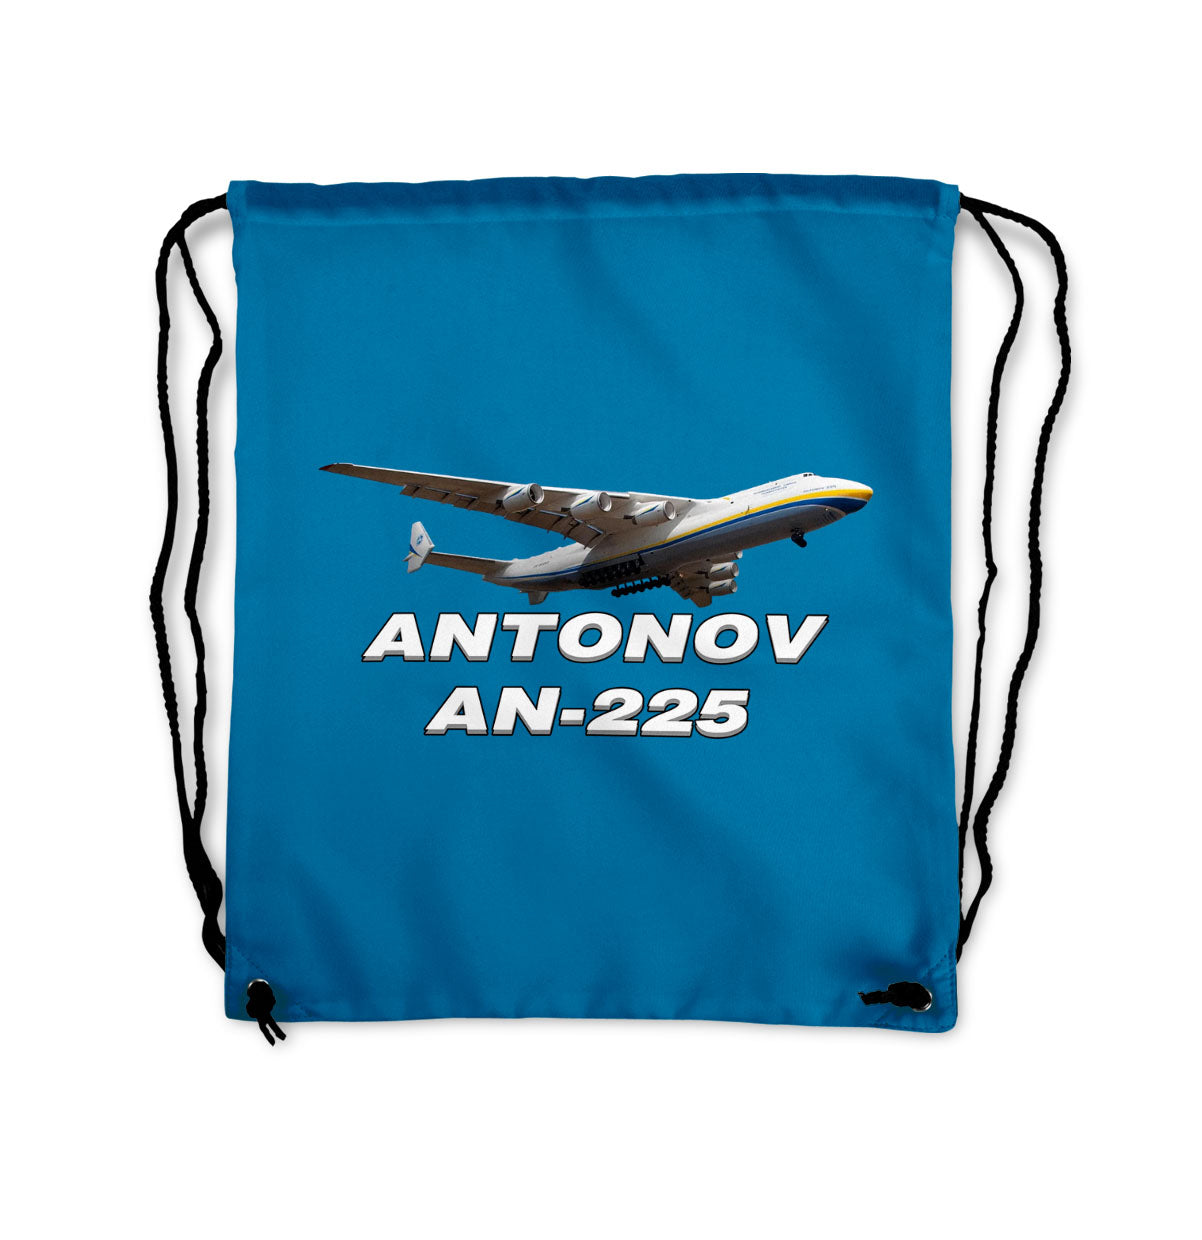 Antonov AN-225 (15) Designed Drawstring Bags